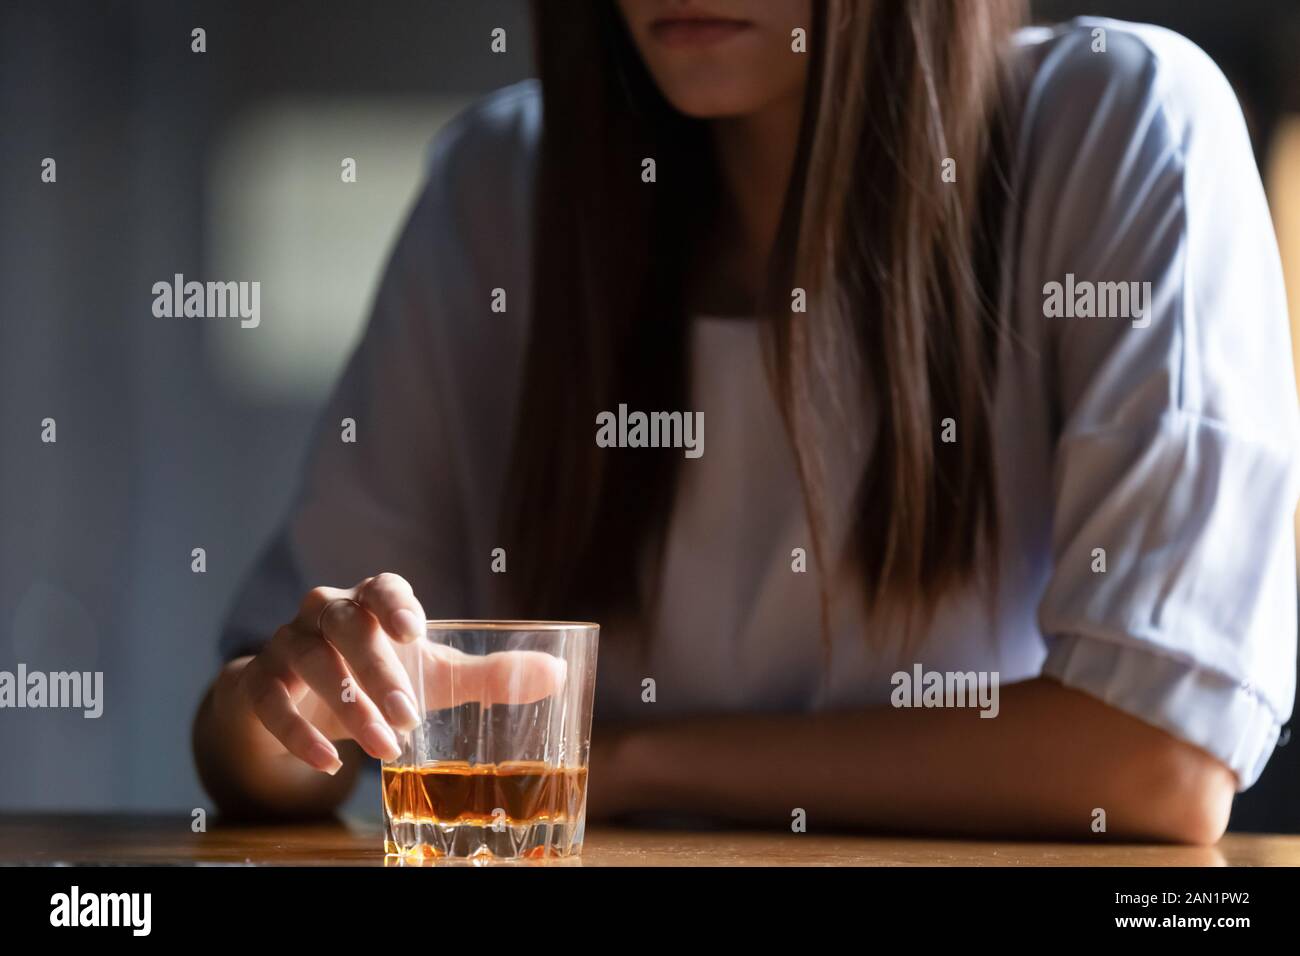 Close up of woman drinking alcohol at bar counter Stock Photo